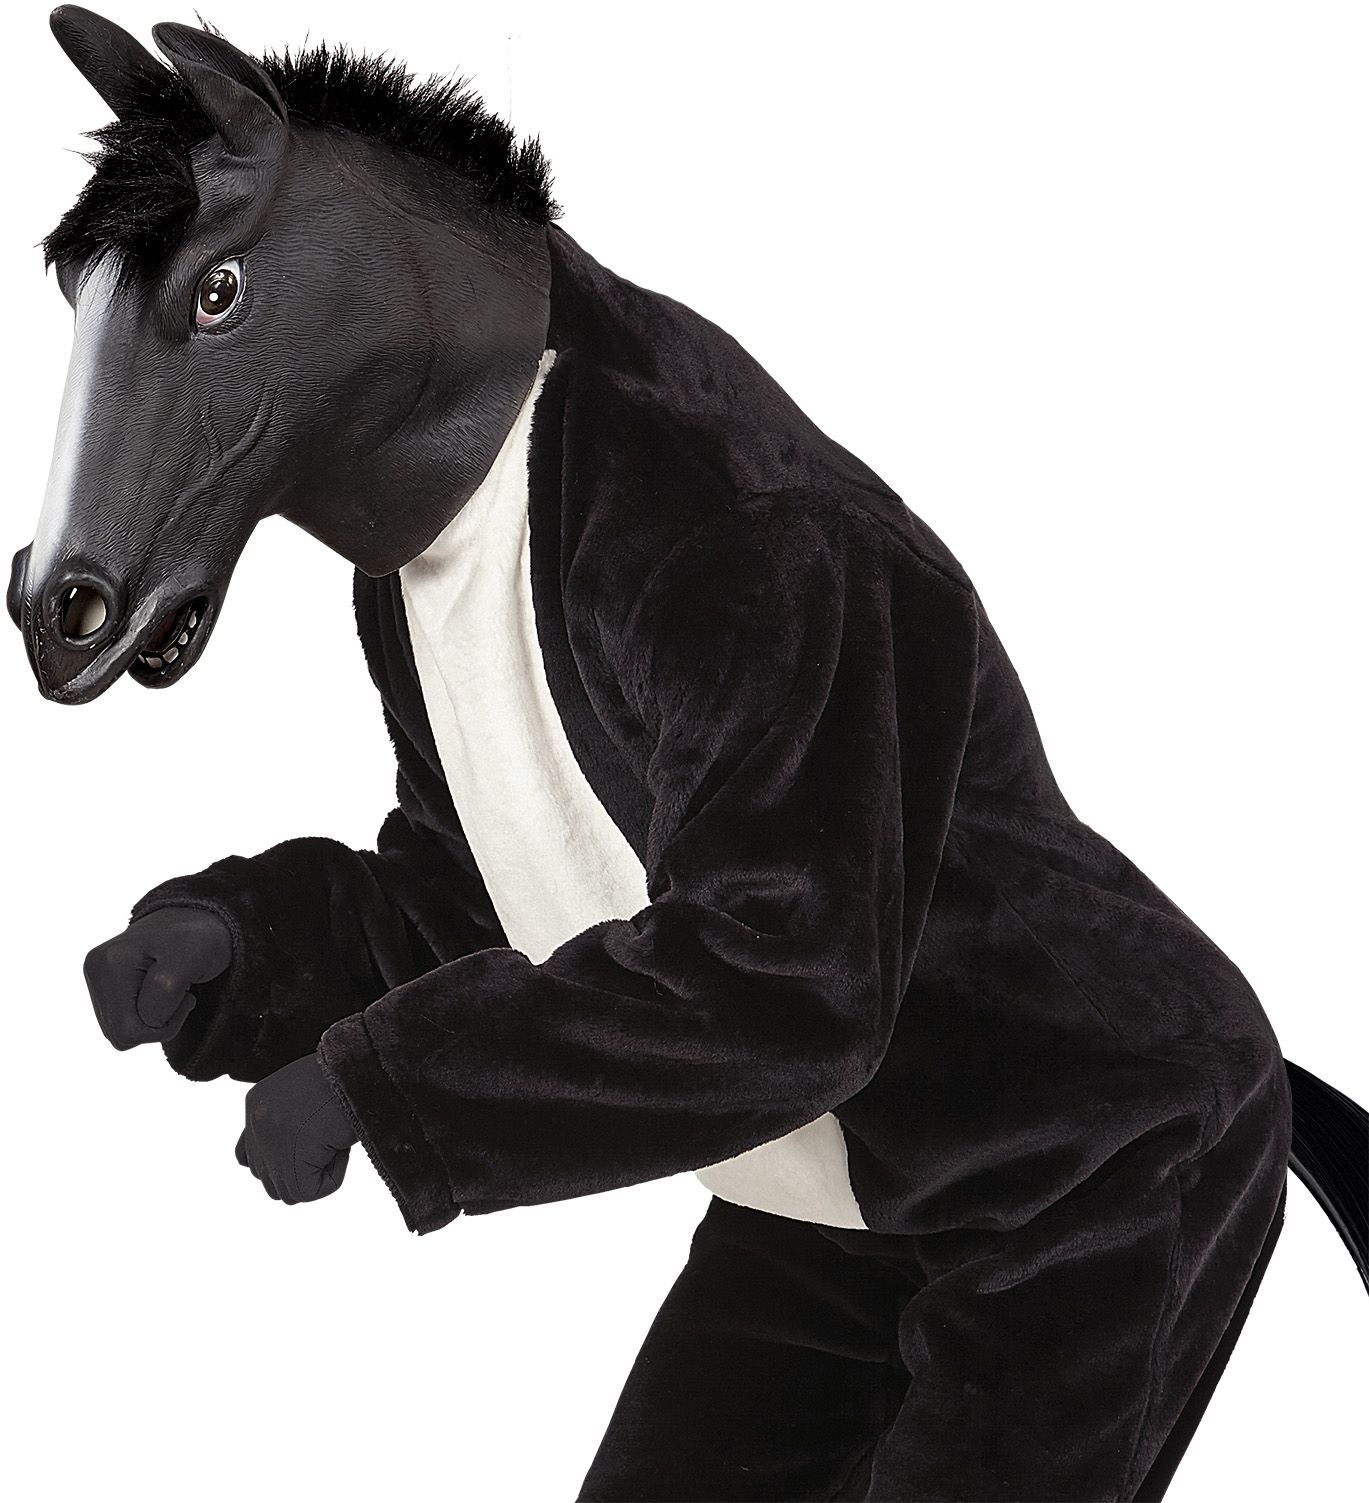 Onvoorziene omstandigheden binnenplaats stel je voor Zwarte paarden masker | Carnavalskleding.nl